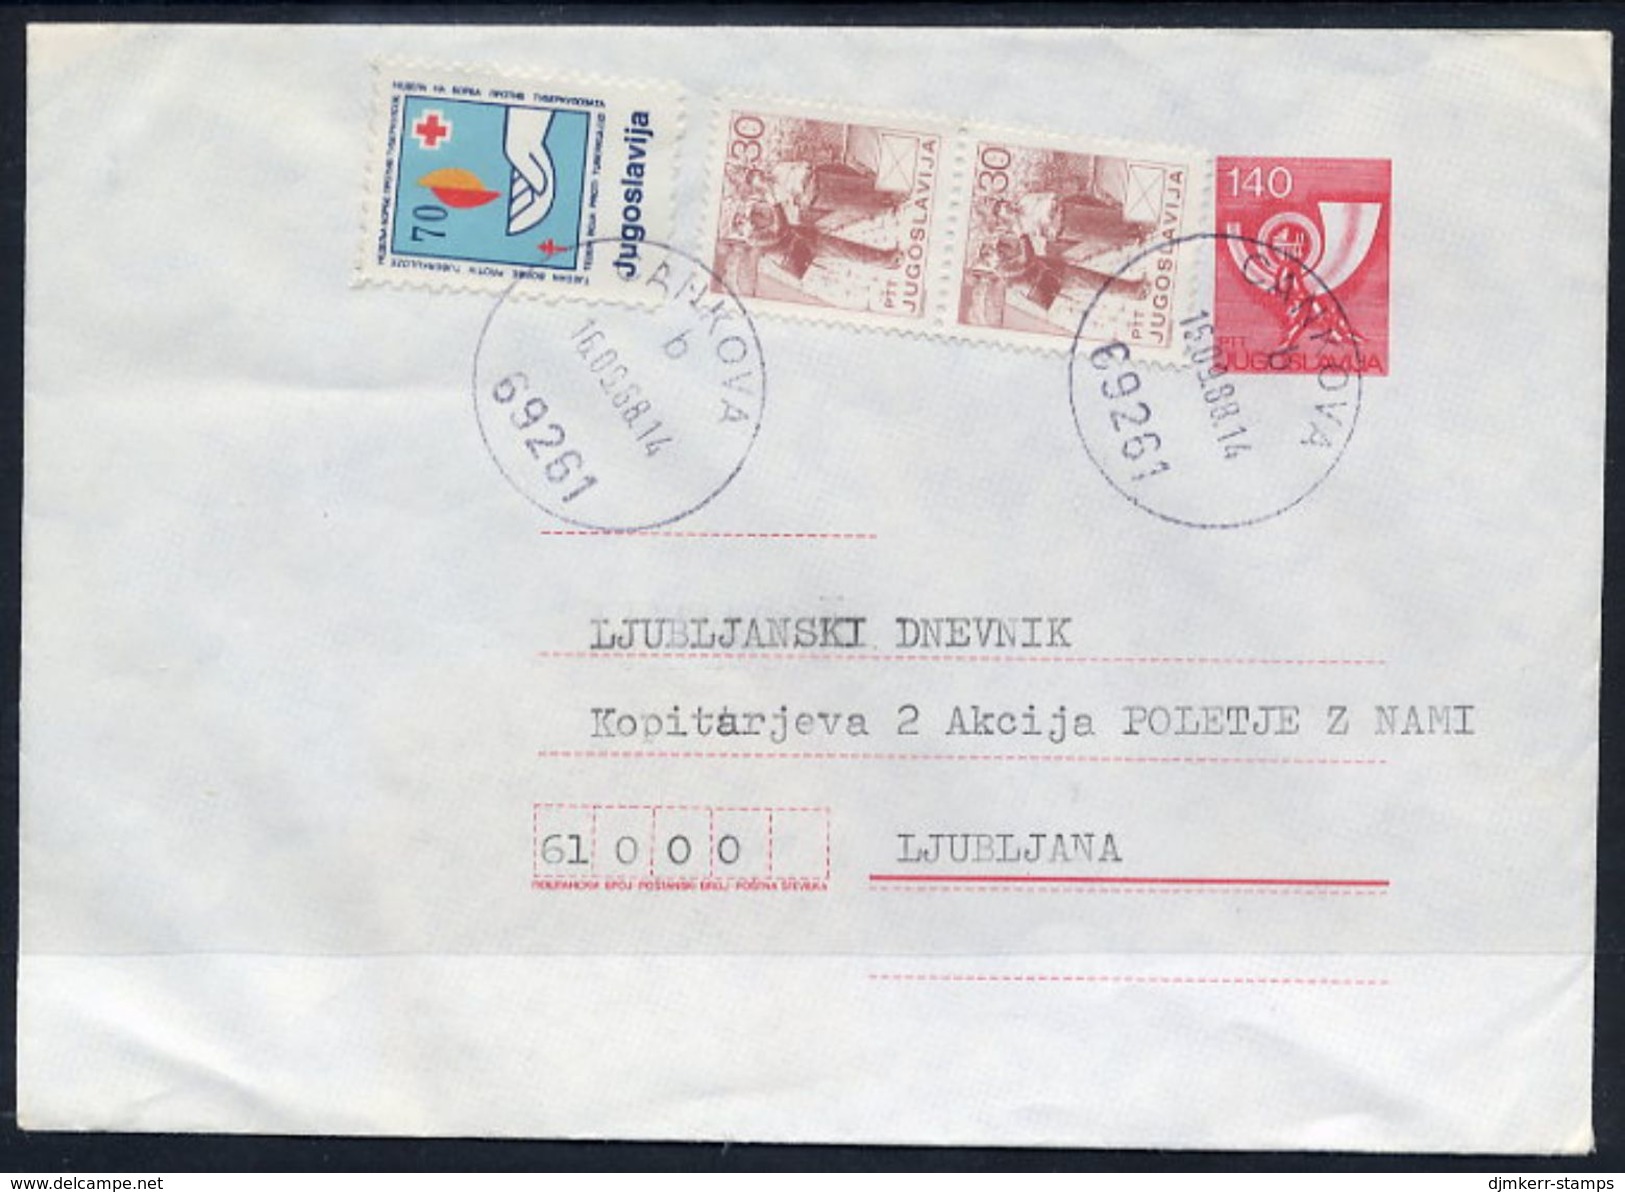 YUGOSLAVIA 1988 Posthorn 140 D.stationery Envelope Used With Additional Franking And TB Week Tax.  Michel U81 - Interi Postali